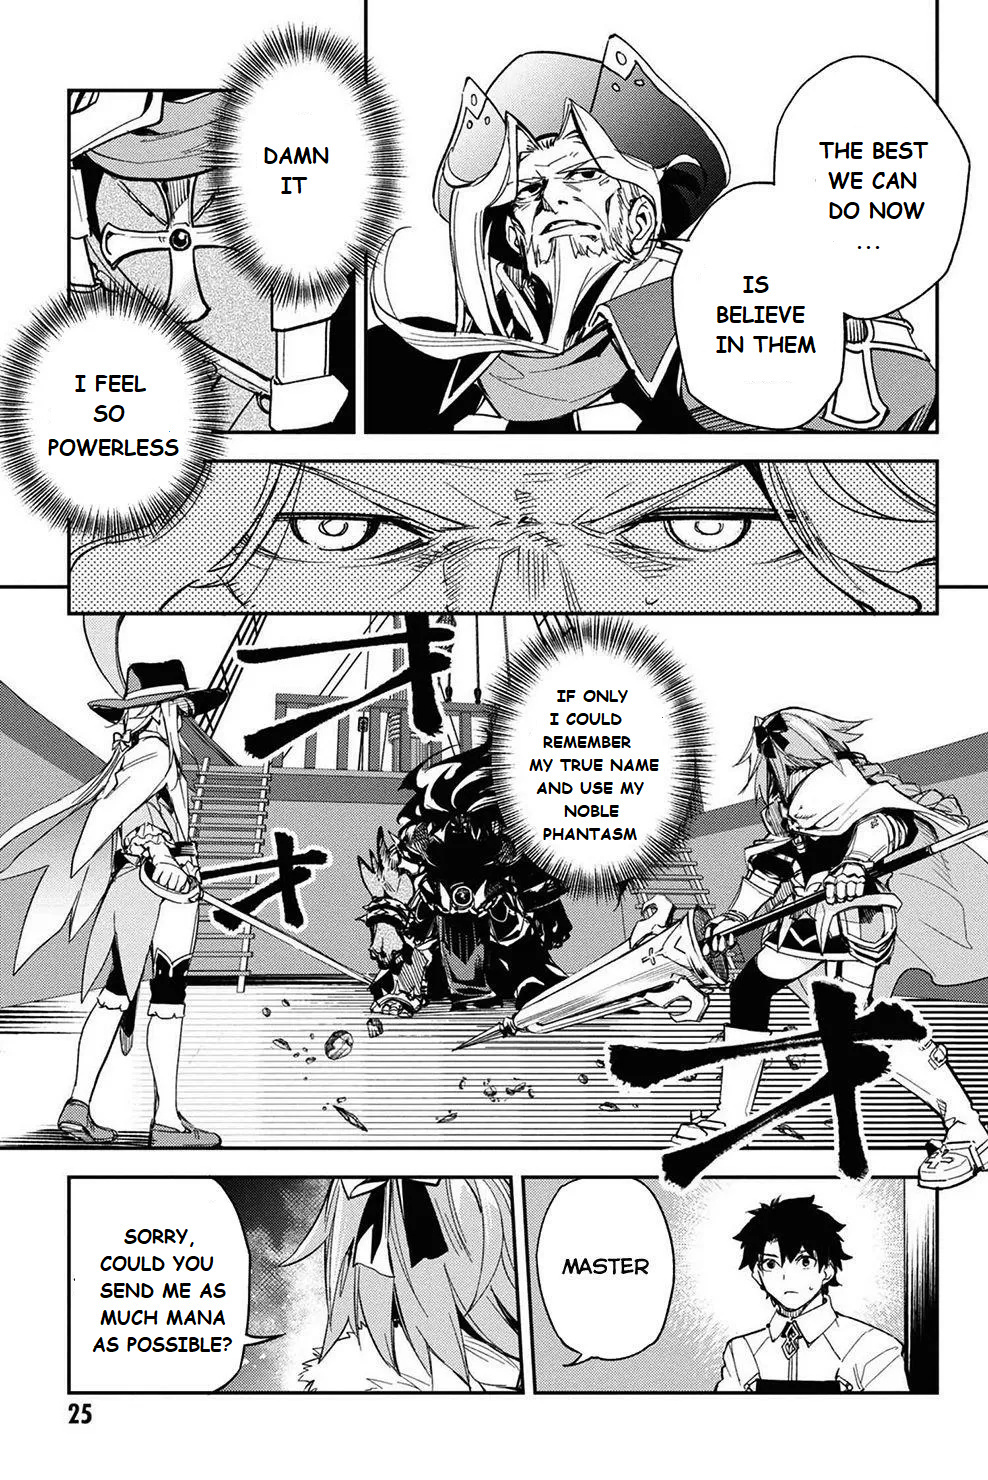 Fate/grand Order Epic Of Remnant - Ashu Tokuiten Ii - Denshou Chitei Sekai Agartha - Agartha No Onna - Page 3